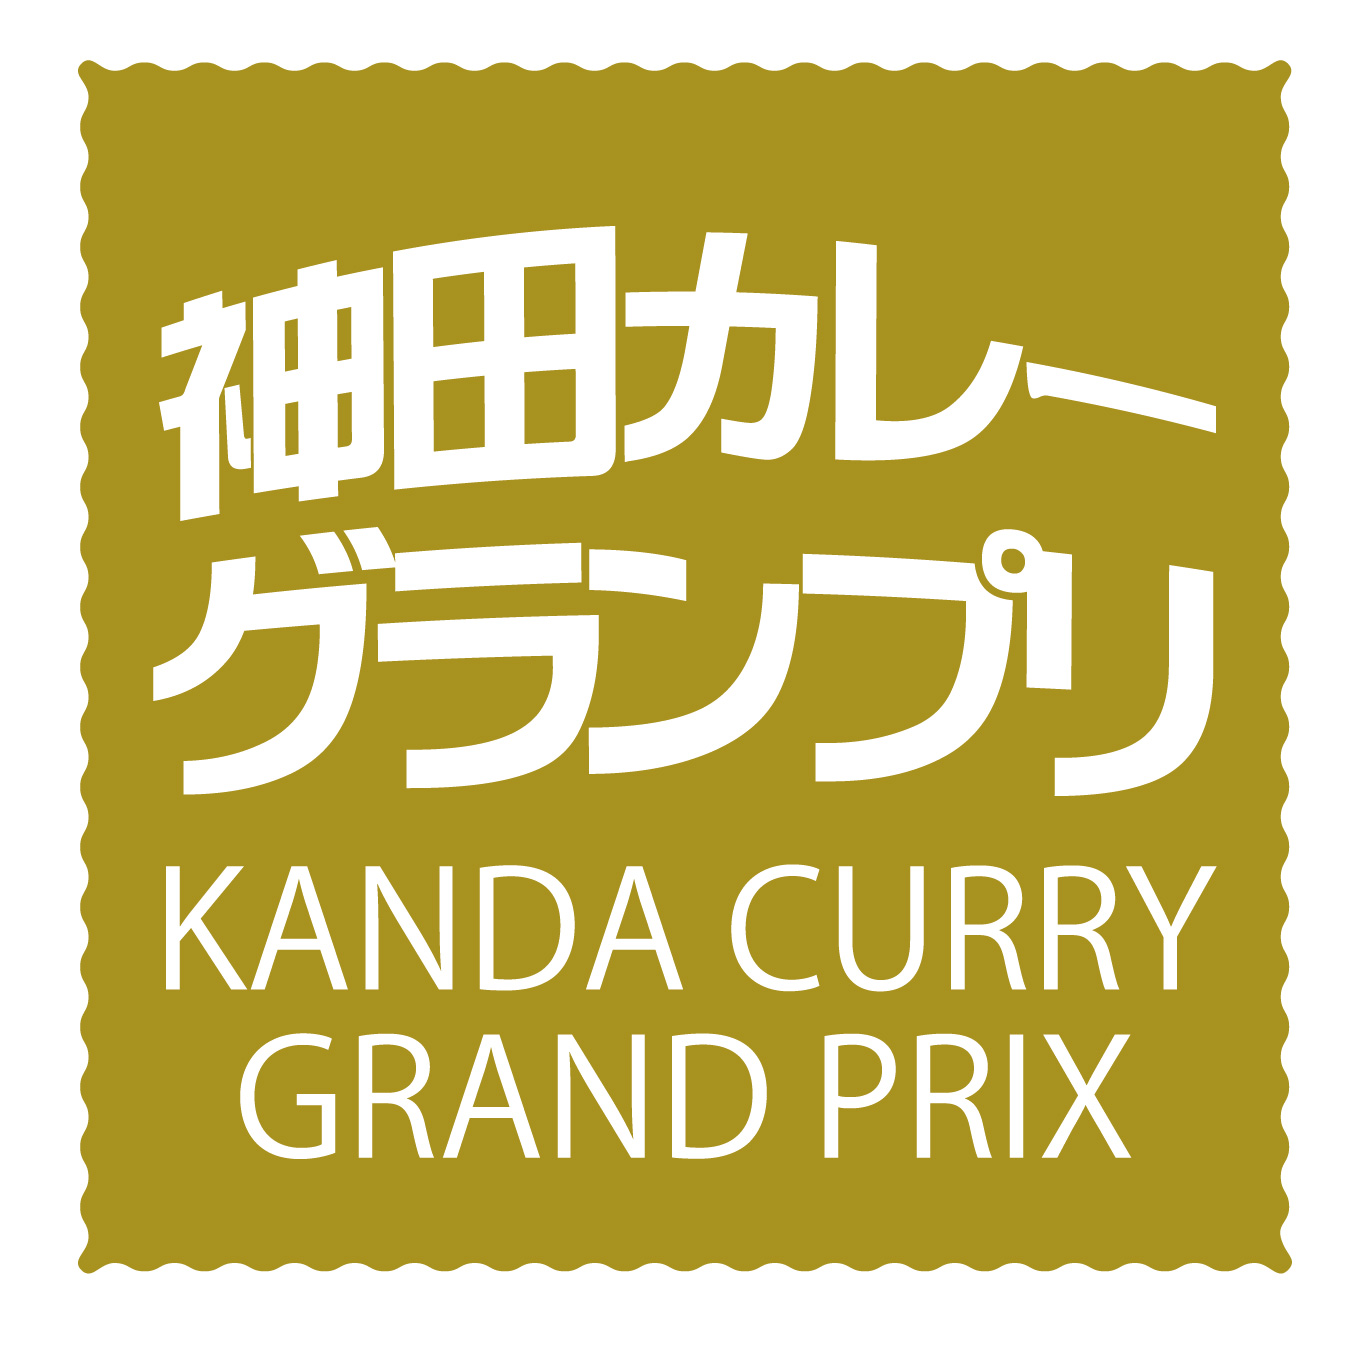 KANDA CURRY GRAND PRIX